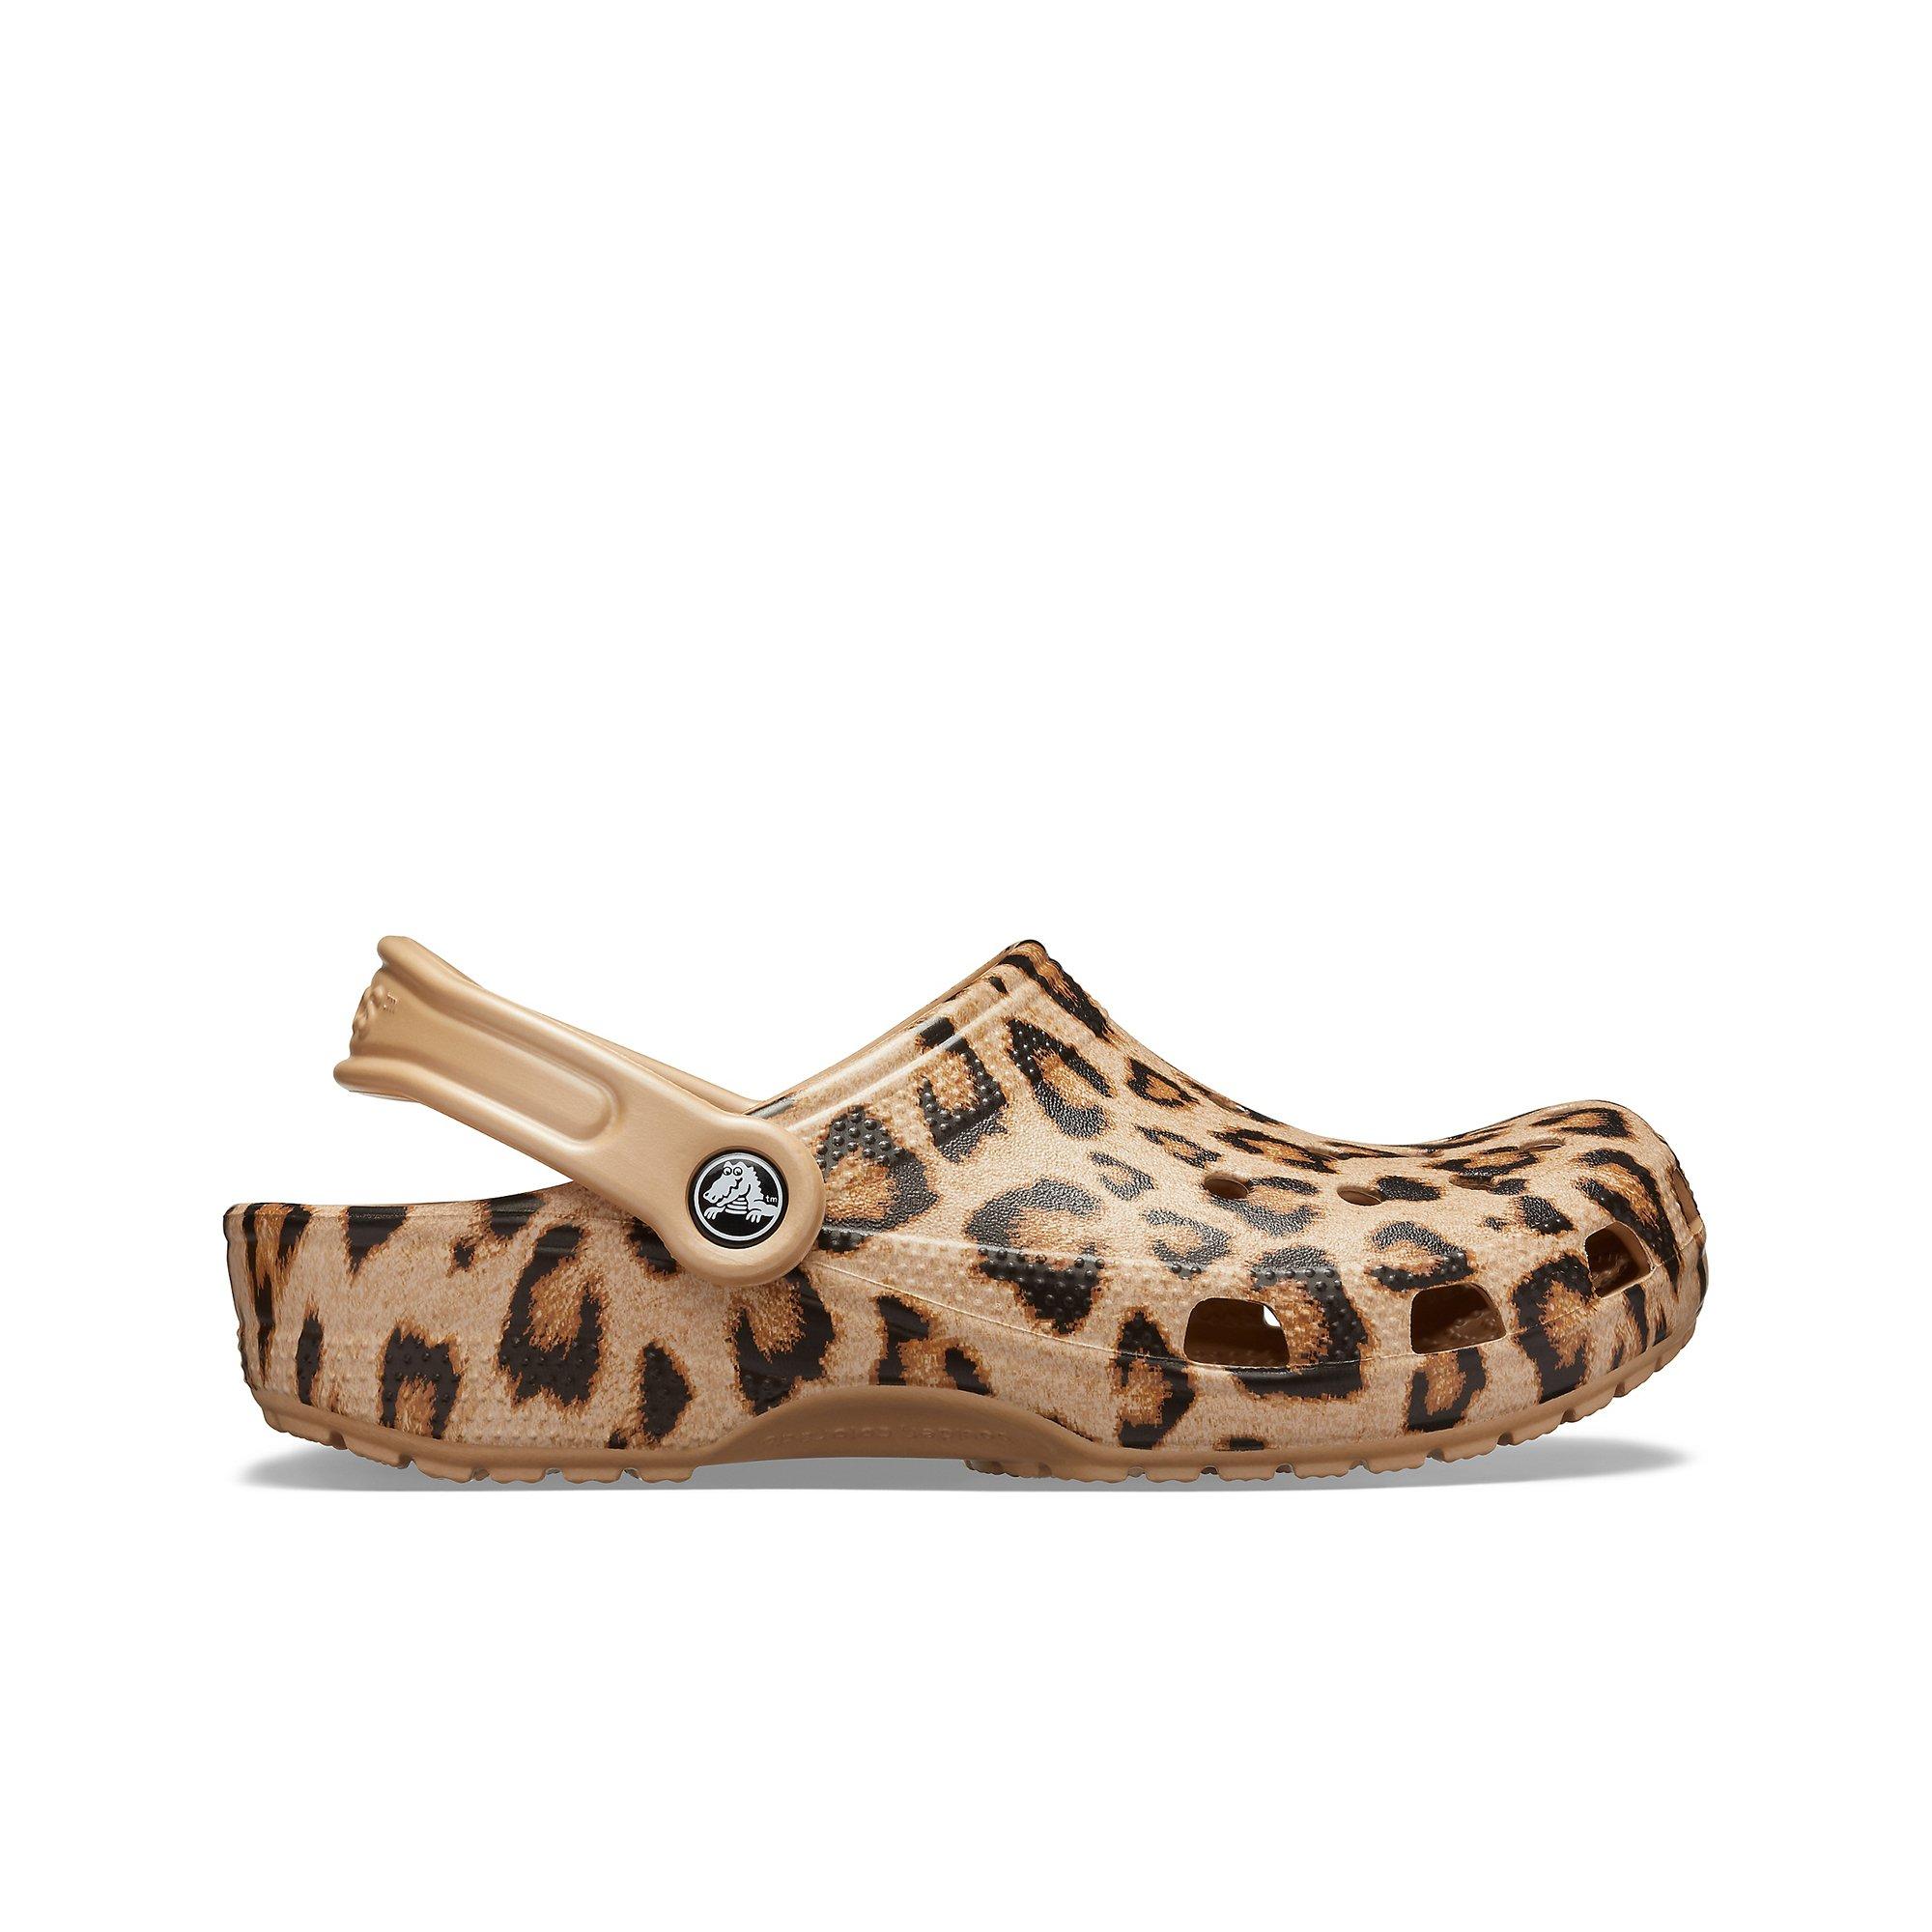 leopard adidas slides